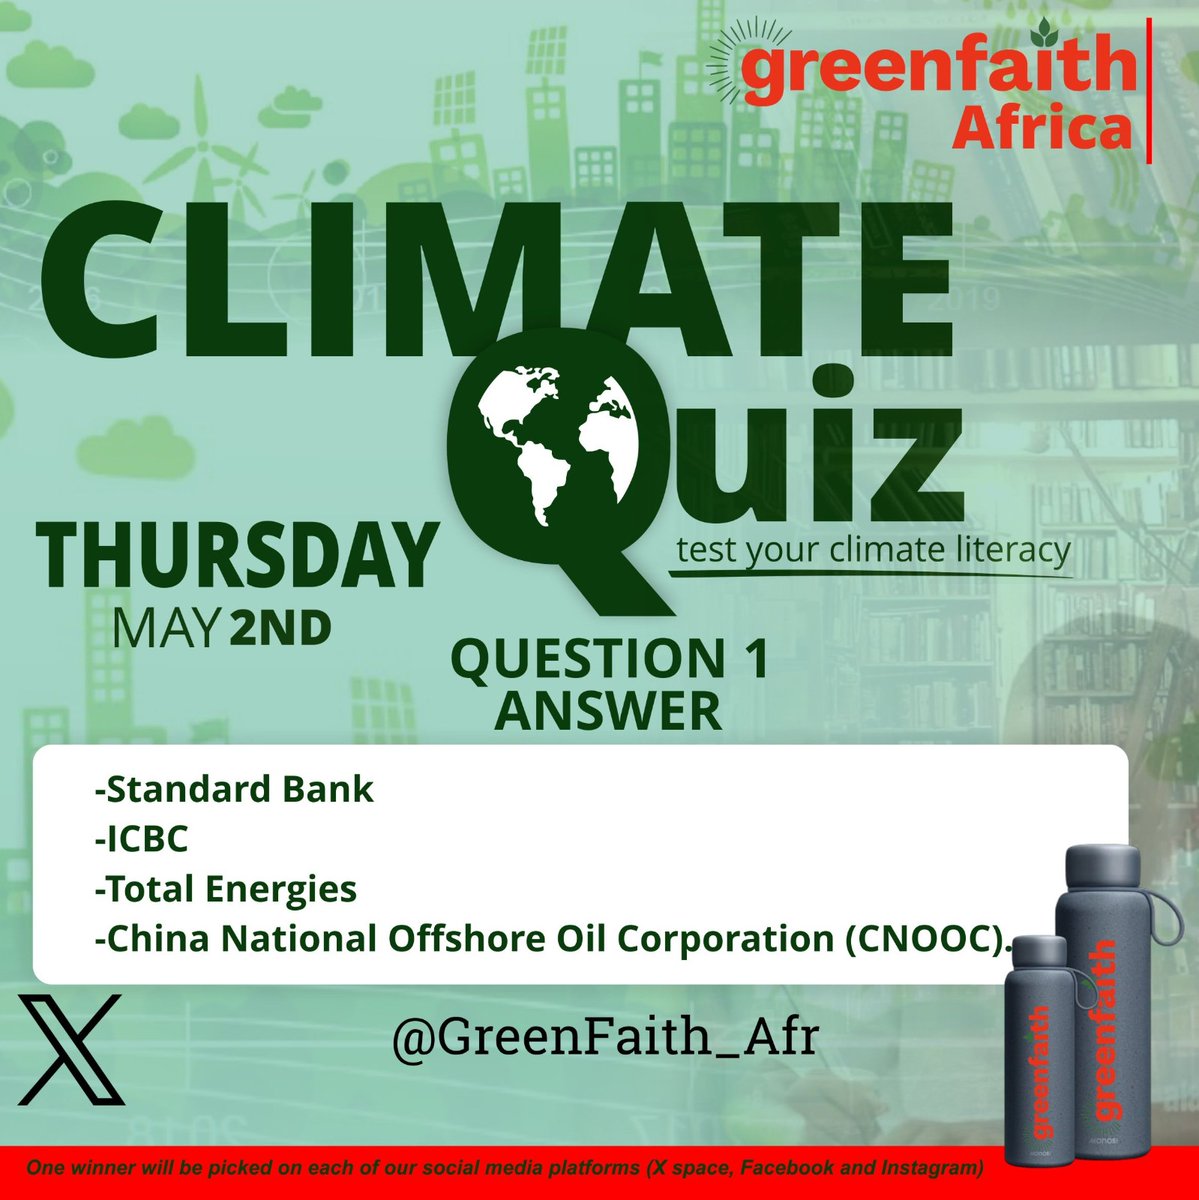 Correct Answers 👍

#Faiths4Climate 
#StopEACOP